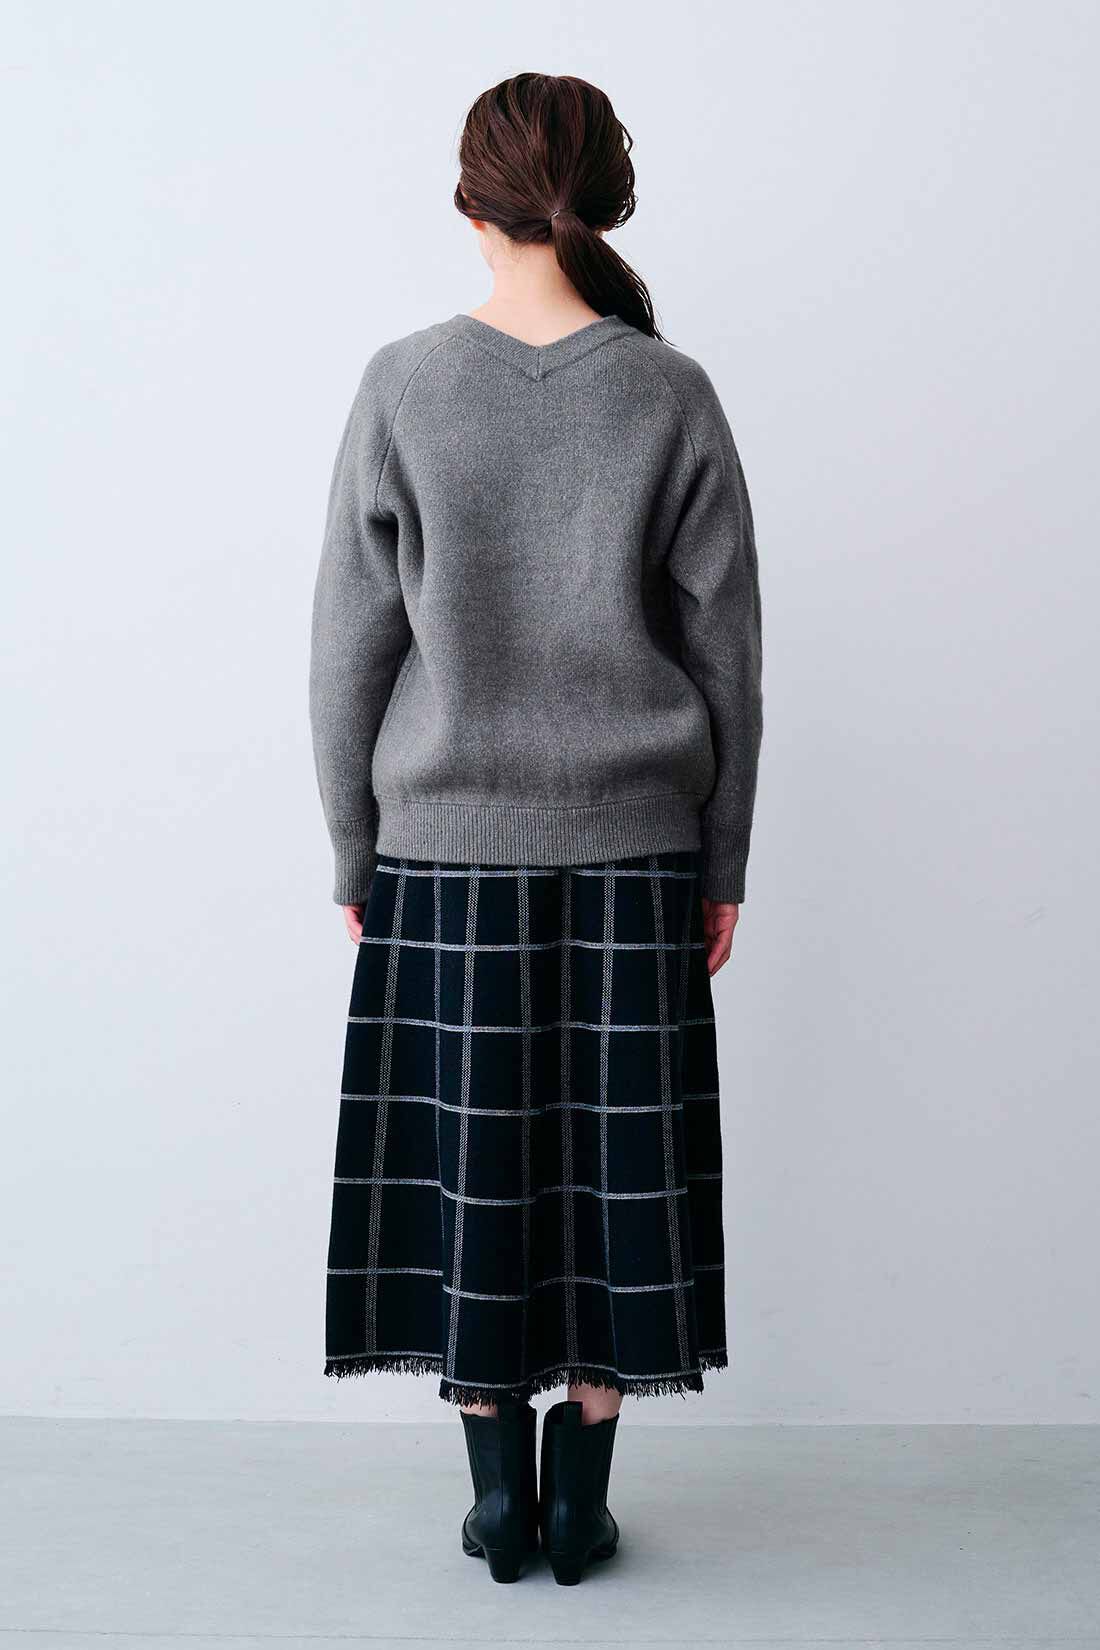 IEDIT[イディット] ダブルジャカードで編み立てた ツイード風チェック のフリンジニットロングスカート〈ブラック×オフホワイト〉｜レディースファッション・洋服の通販｜IEDIT